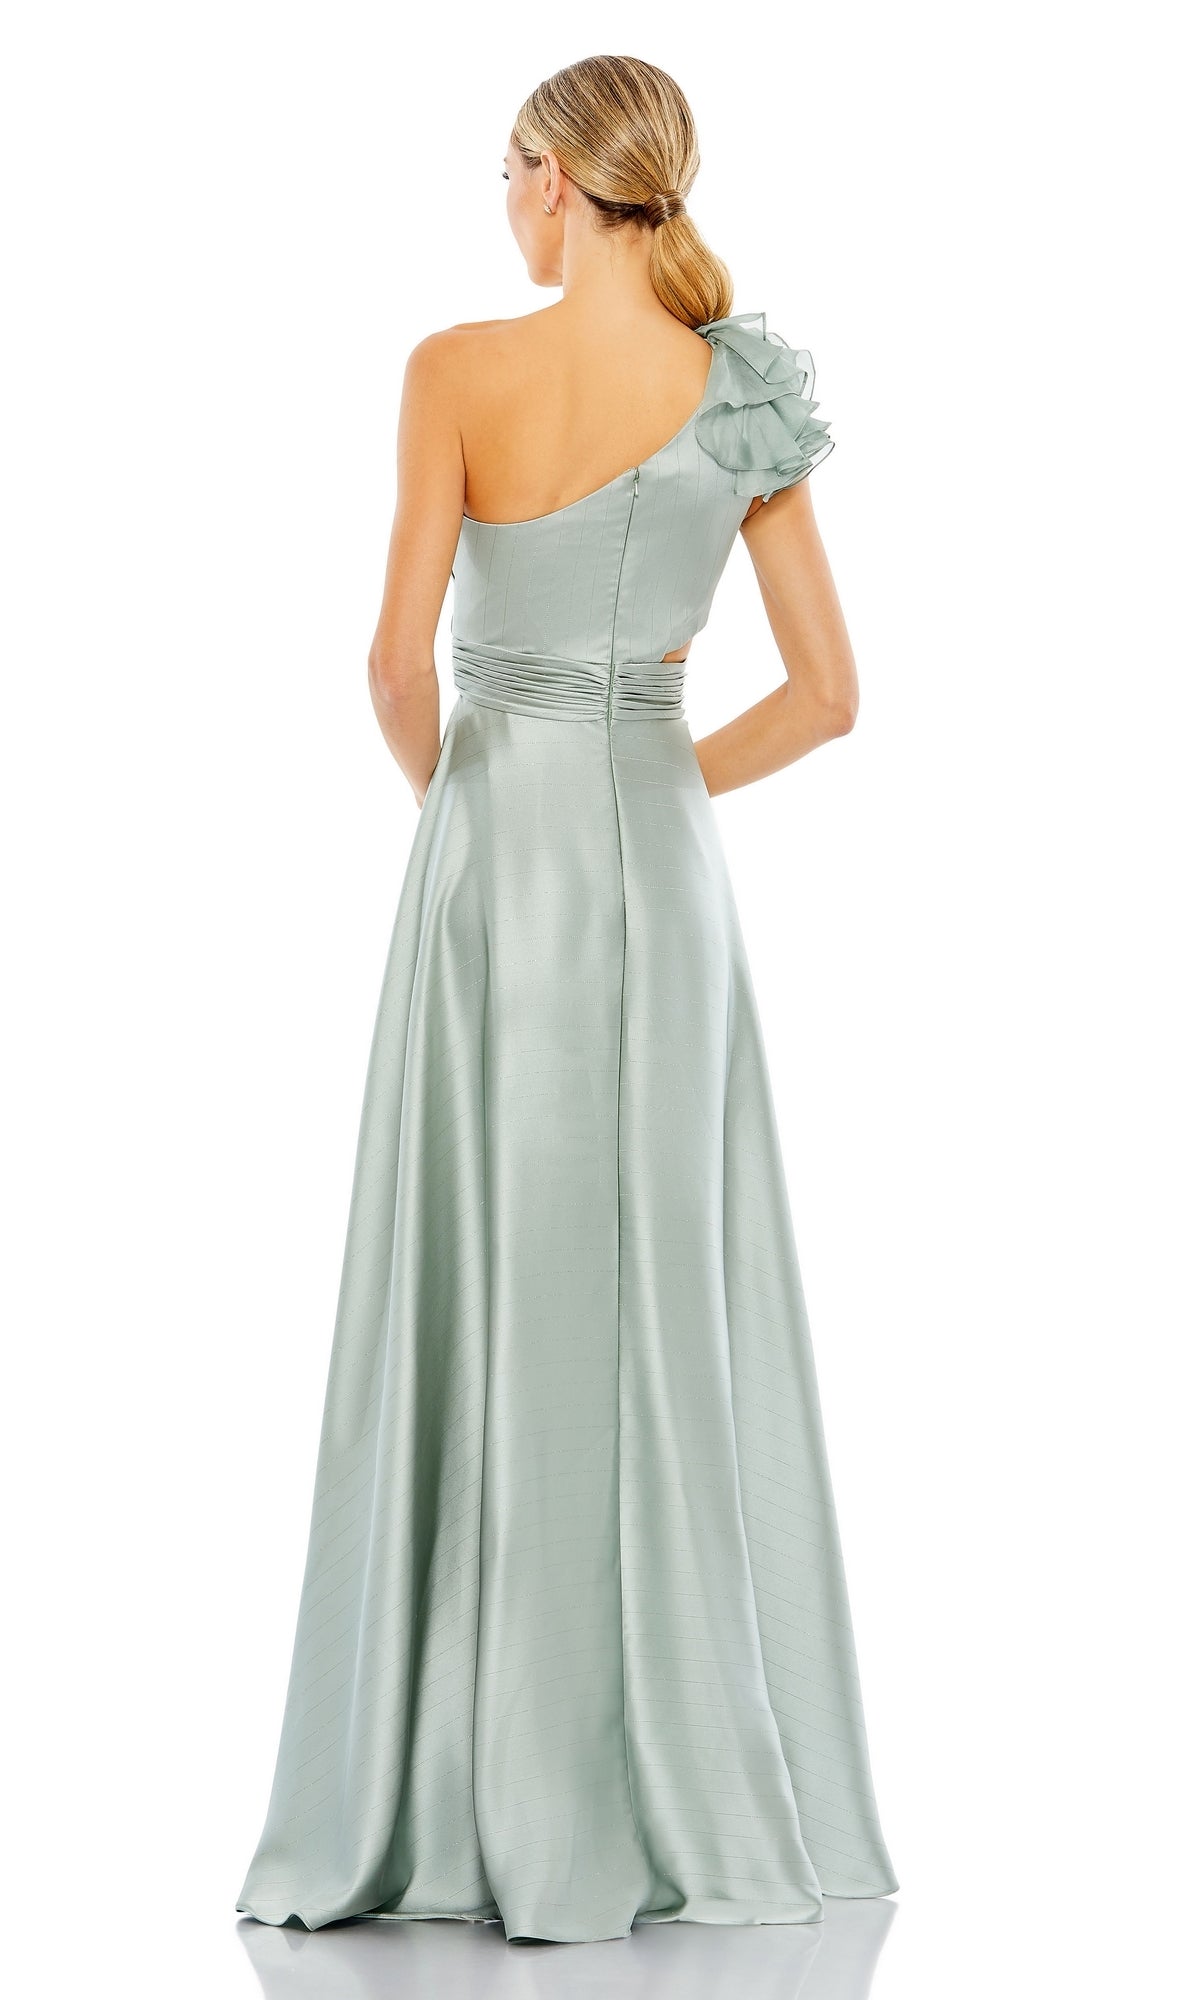 Long Formal Dress 49523 by Mac Duggal